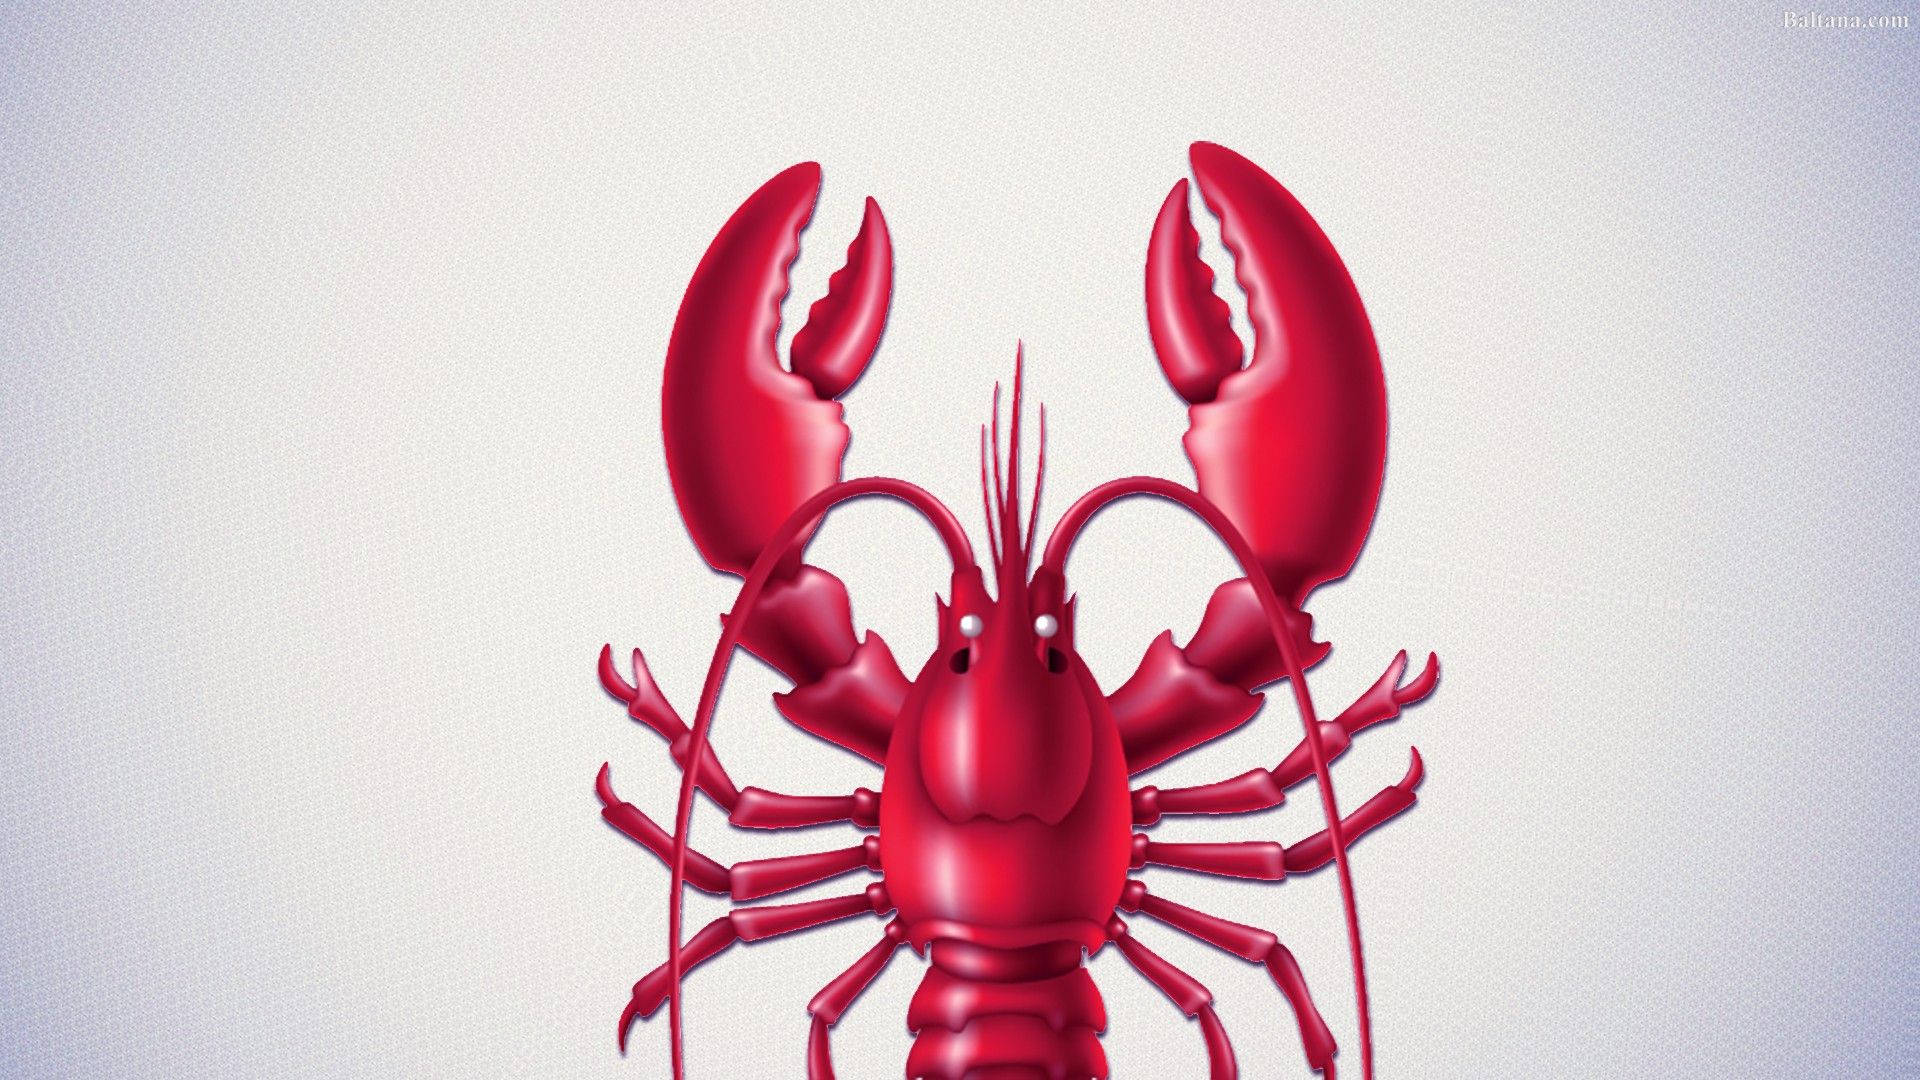 Adorable Lobster Illustration Wallpaper